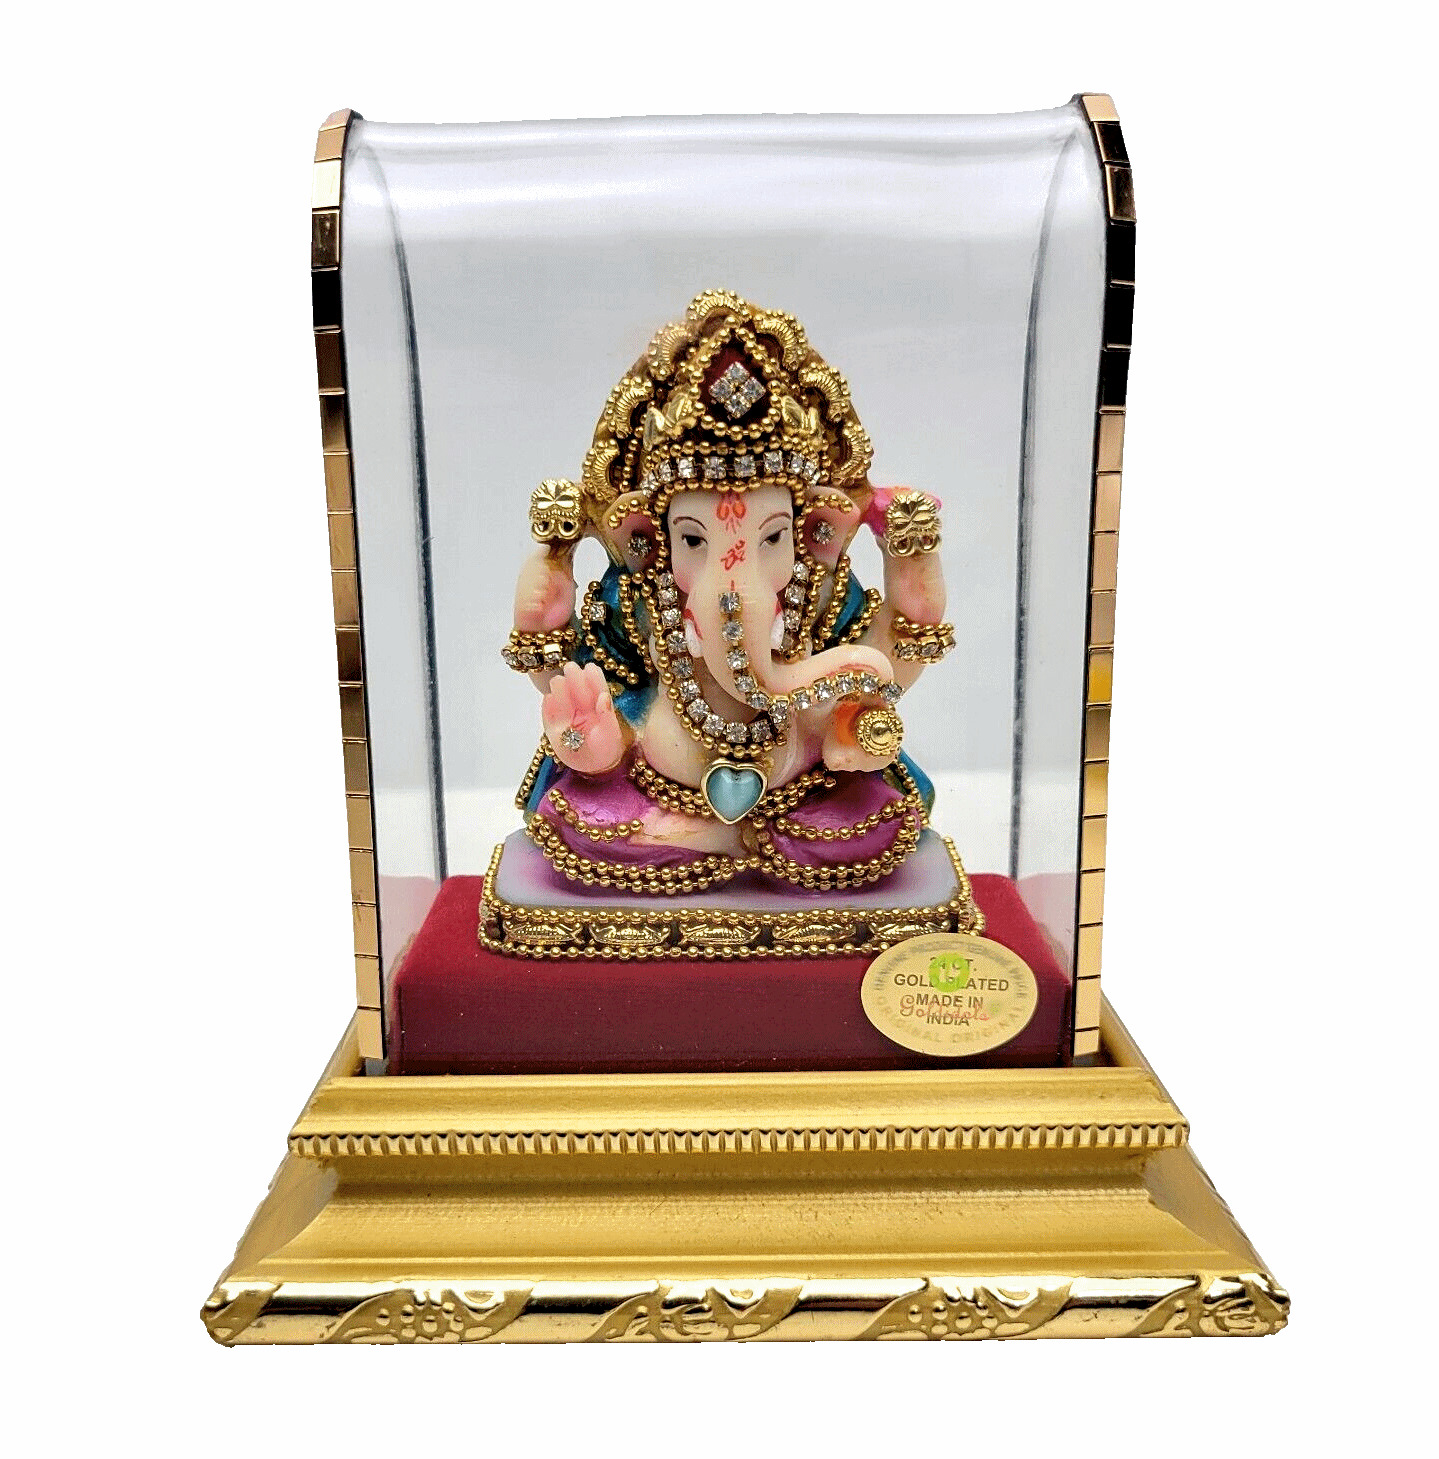 Ganesha 24K Gold Plated Ganesh Statue GoldIdols India Rhinestones & Display Case